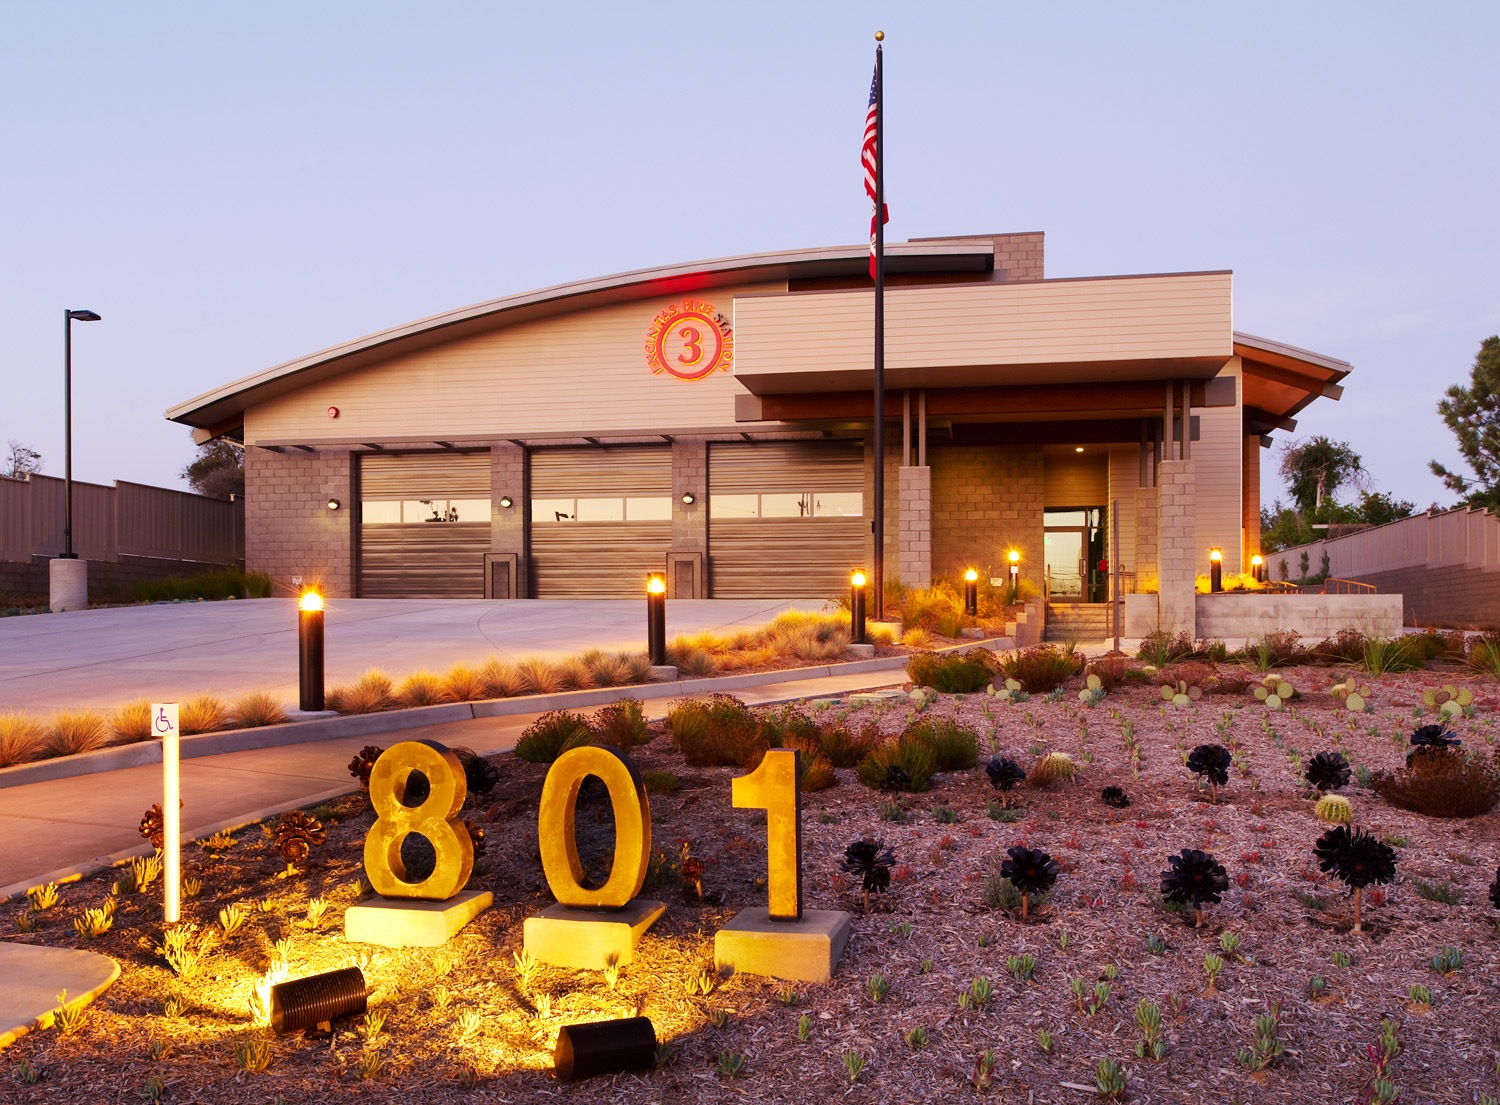 Encinitas Fire Station No. 3: Award-Winning Architectural Design